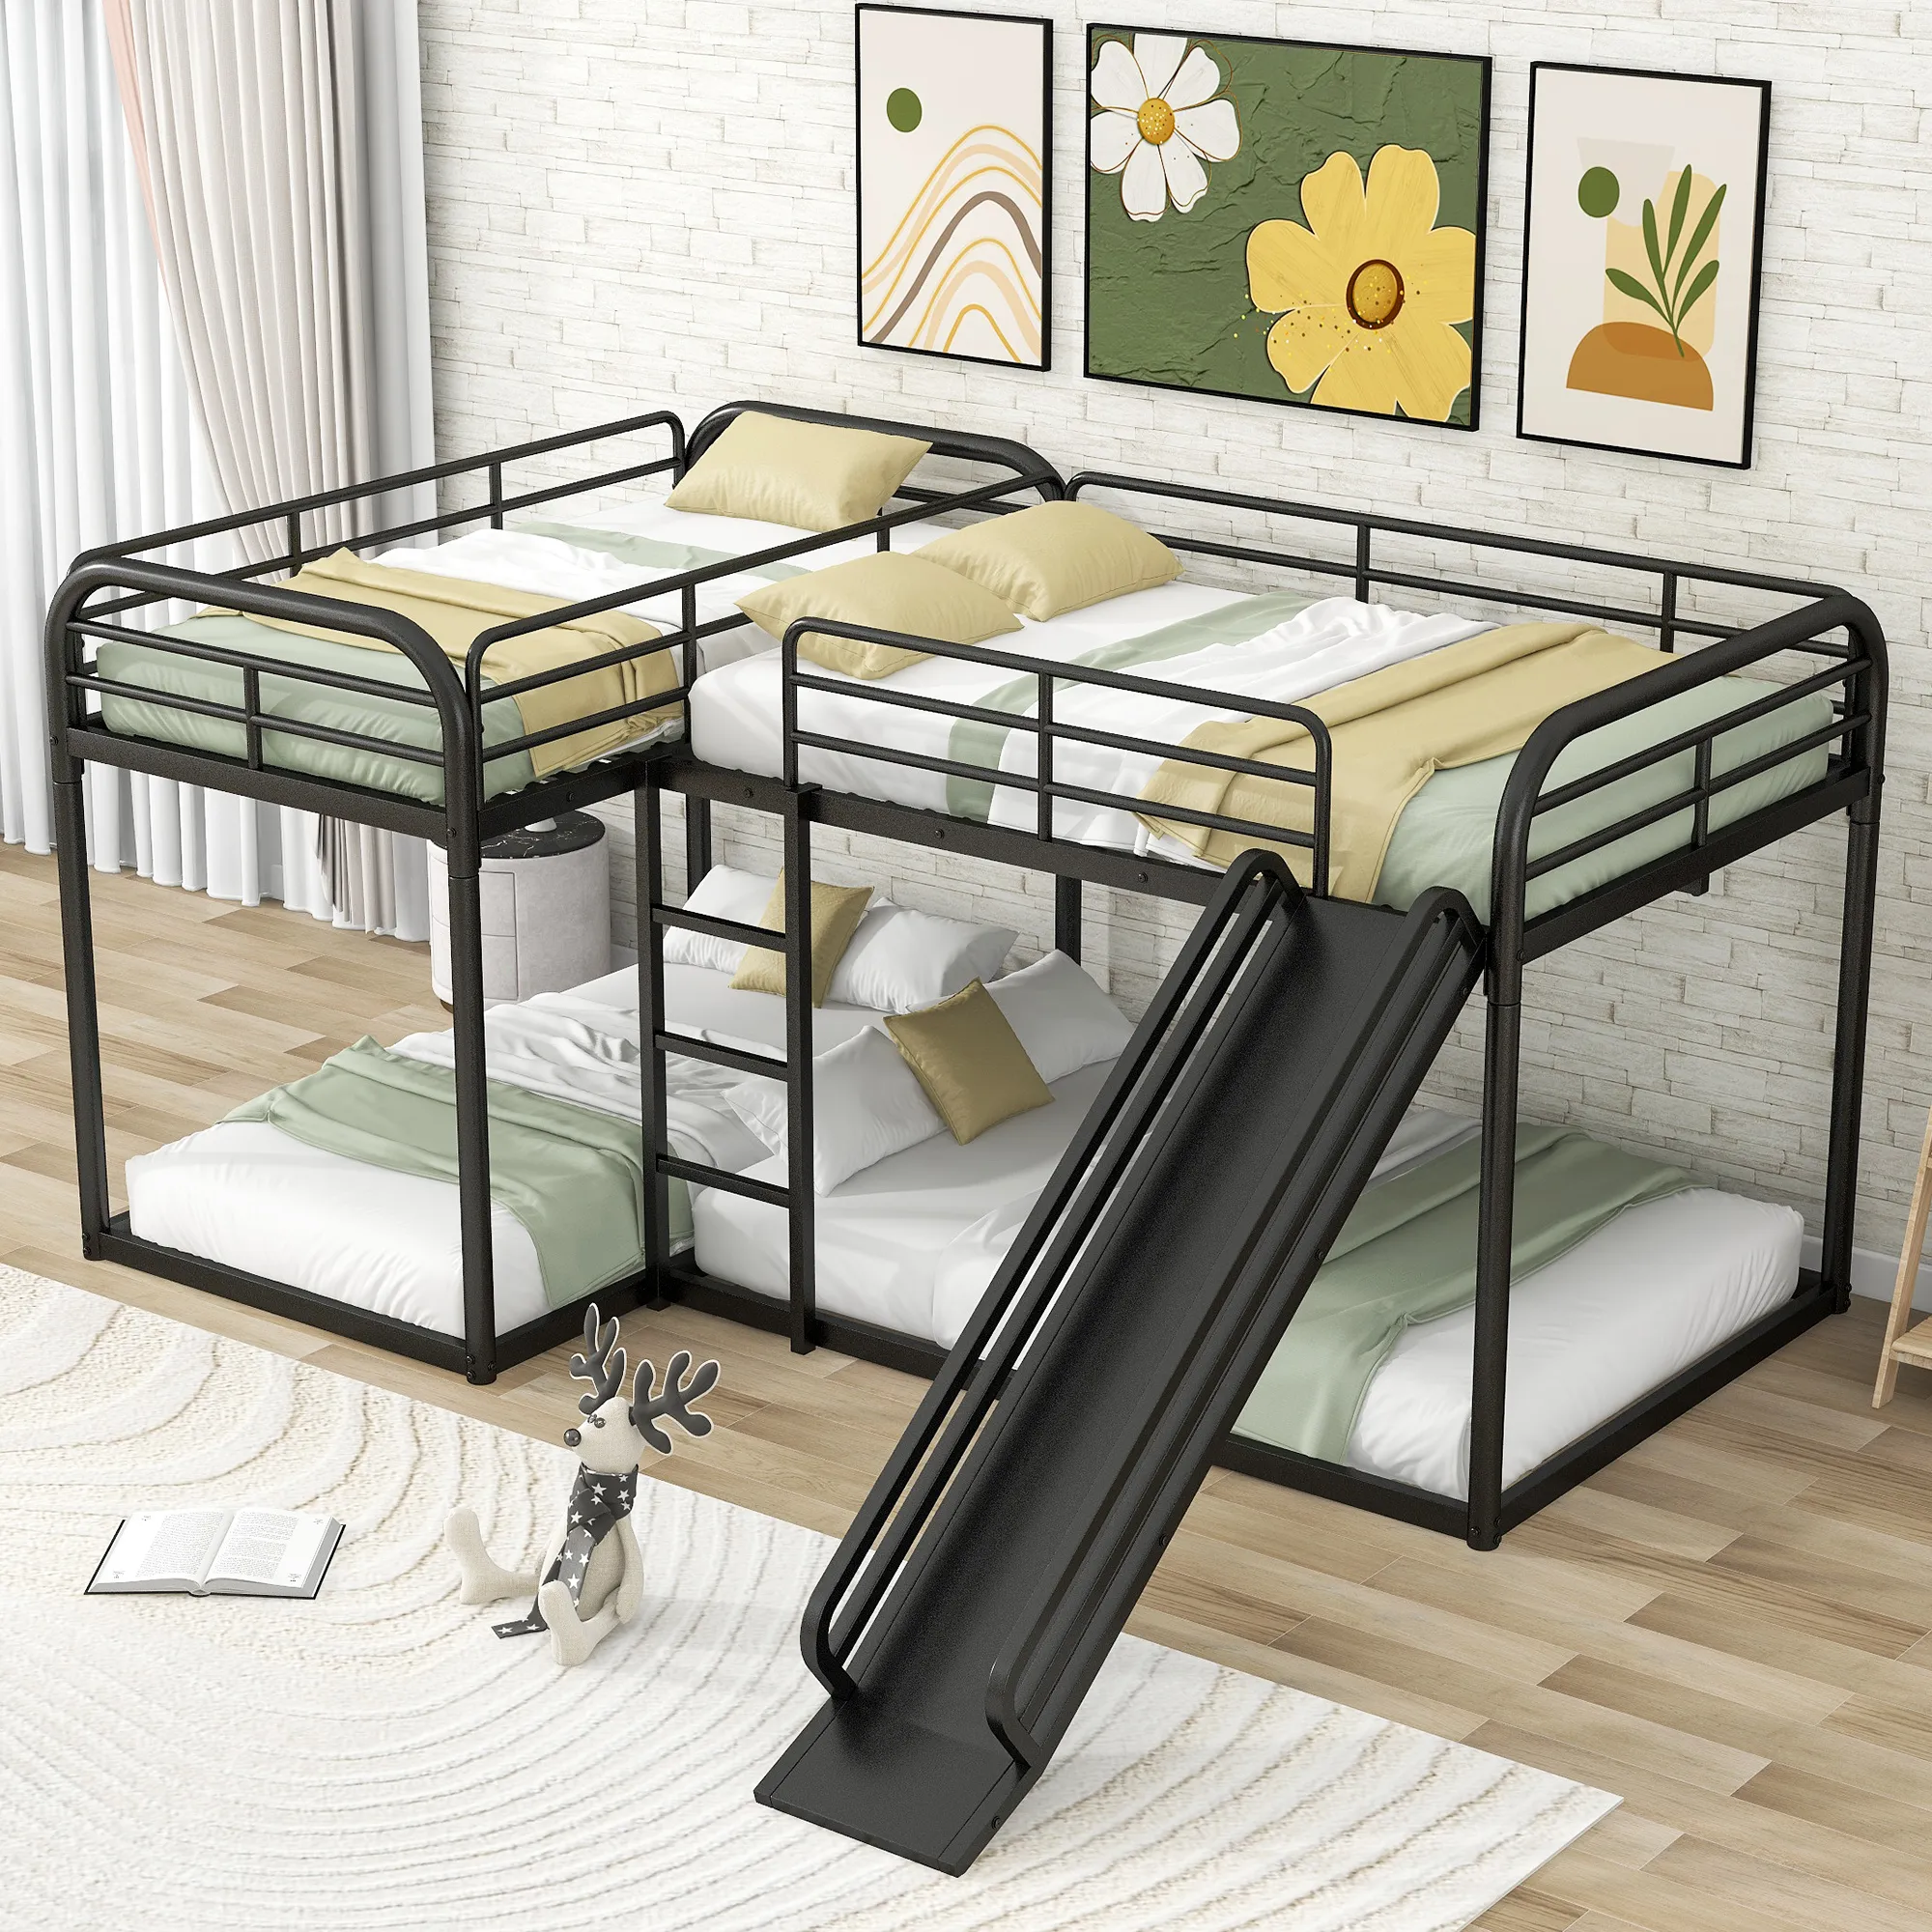 Quad L-Shaped Bunk Bed with Slide